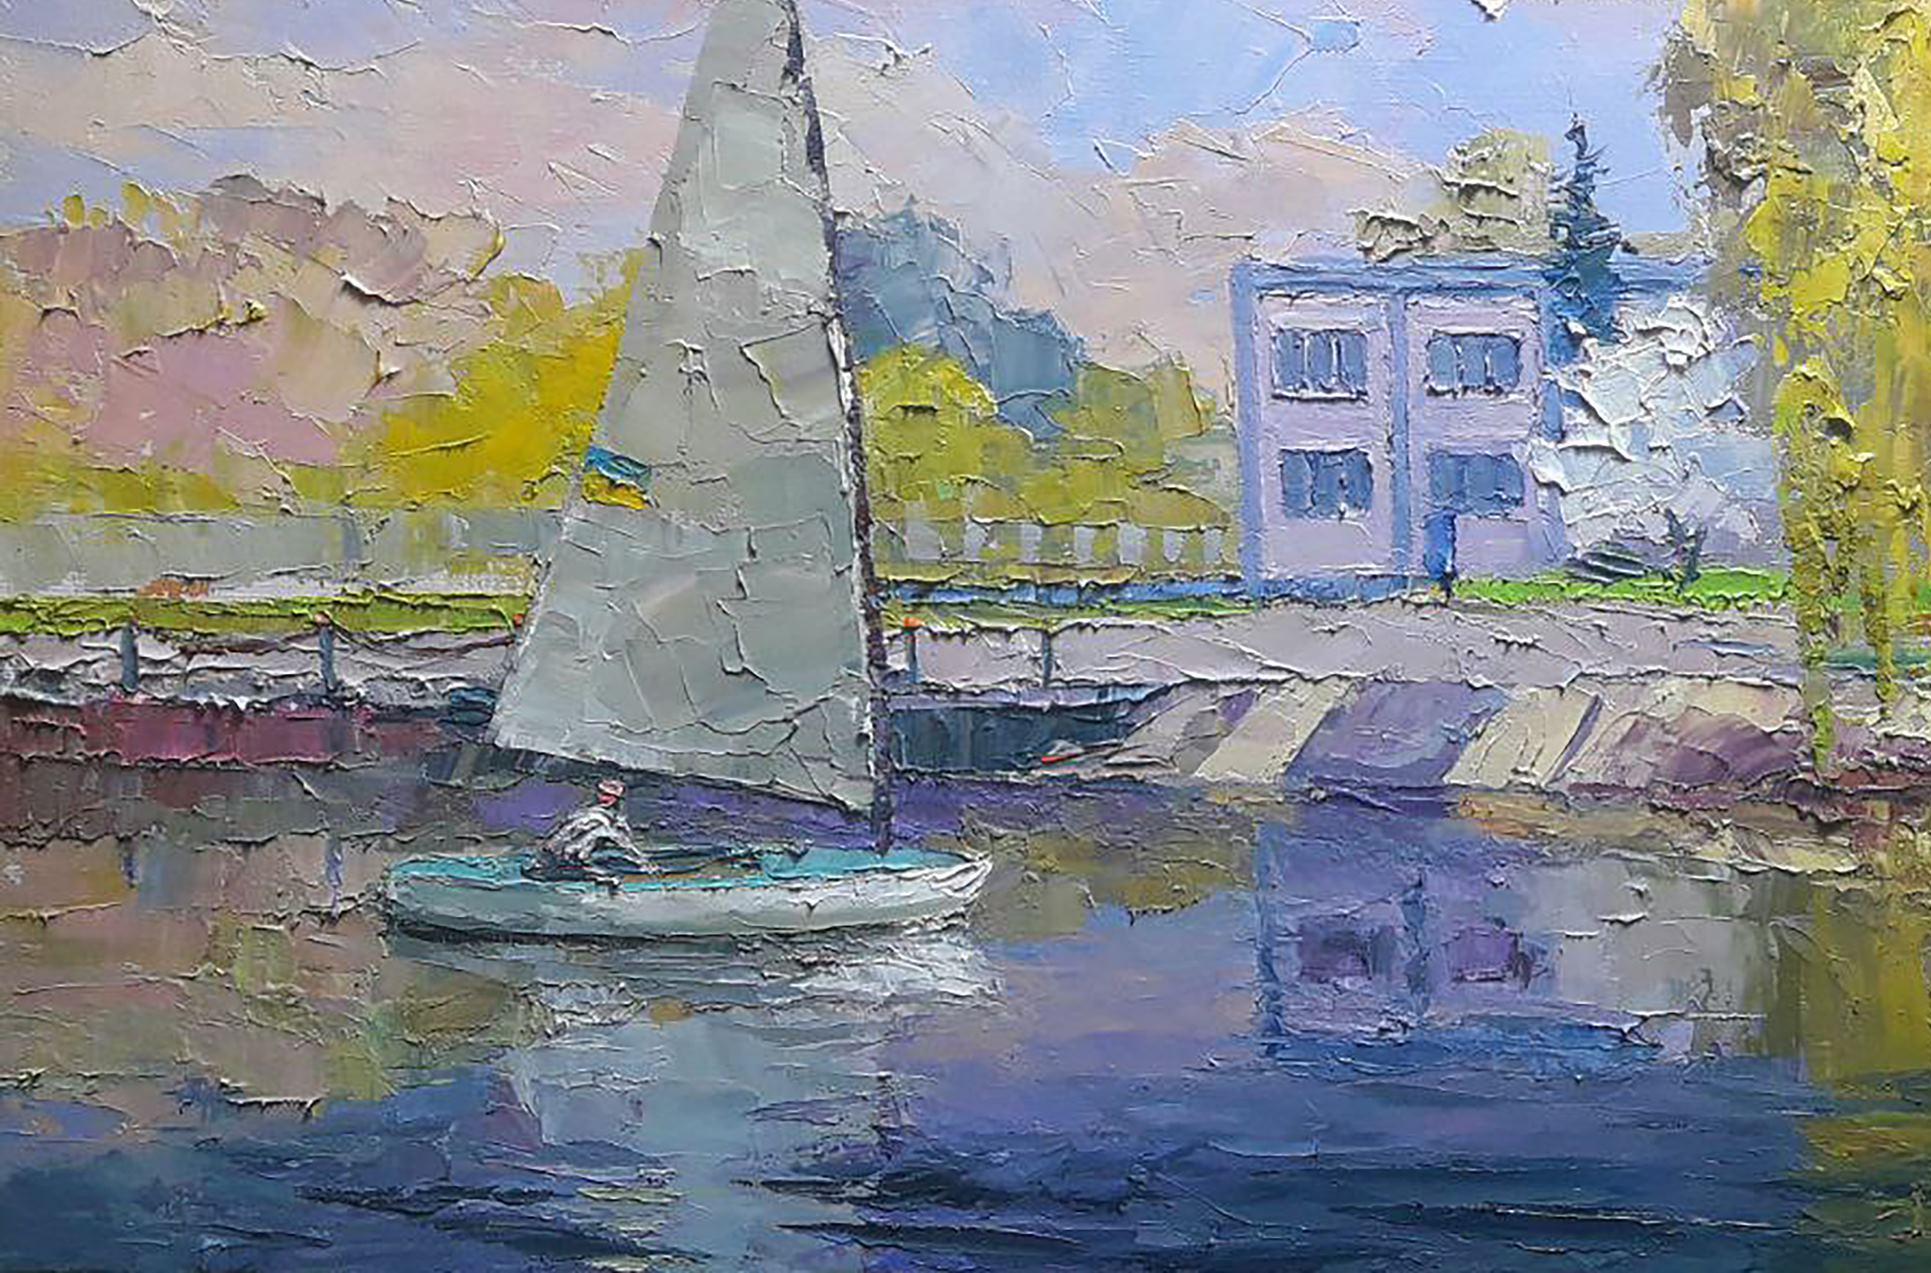 Artist: Boris Serdyuk 
Work: Original oil painting, handmade artwork, one of a kind 
Medium: Oil on Canvas
Style: Impressionism
Year: 2020
Title: Yacht Club
Size: 19.5